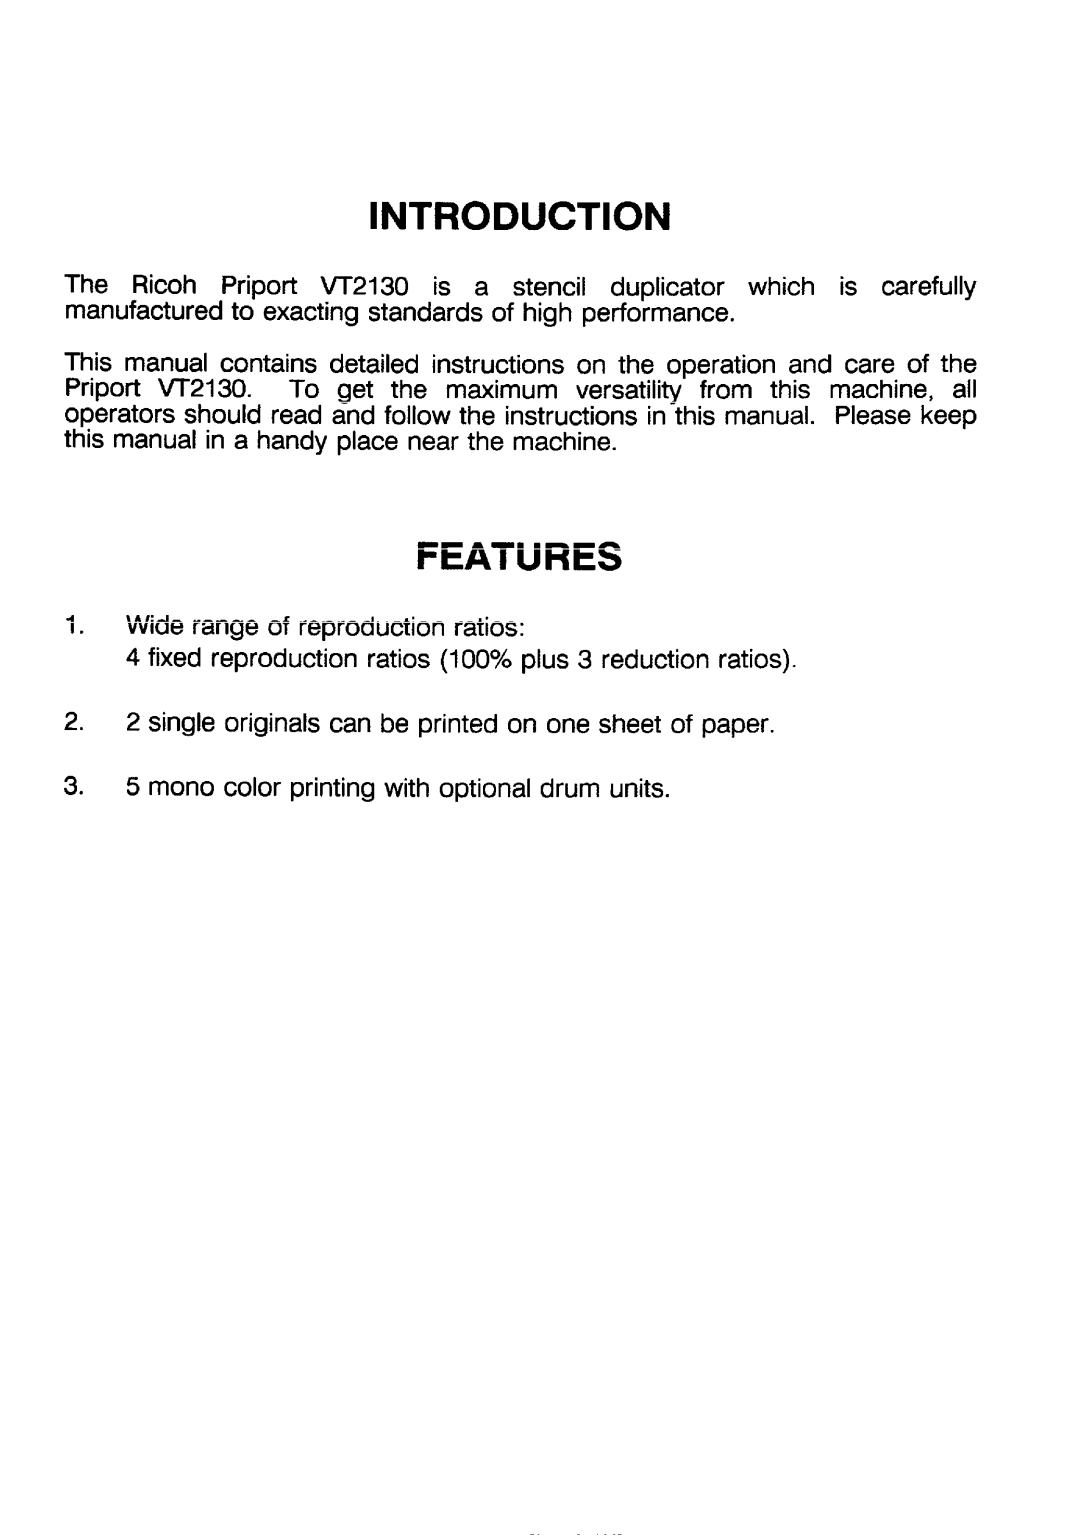 Ricoh PRIPORT VT2130 manual Introduction 